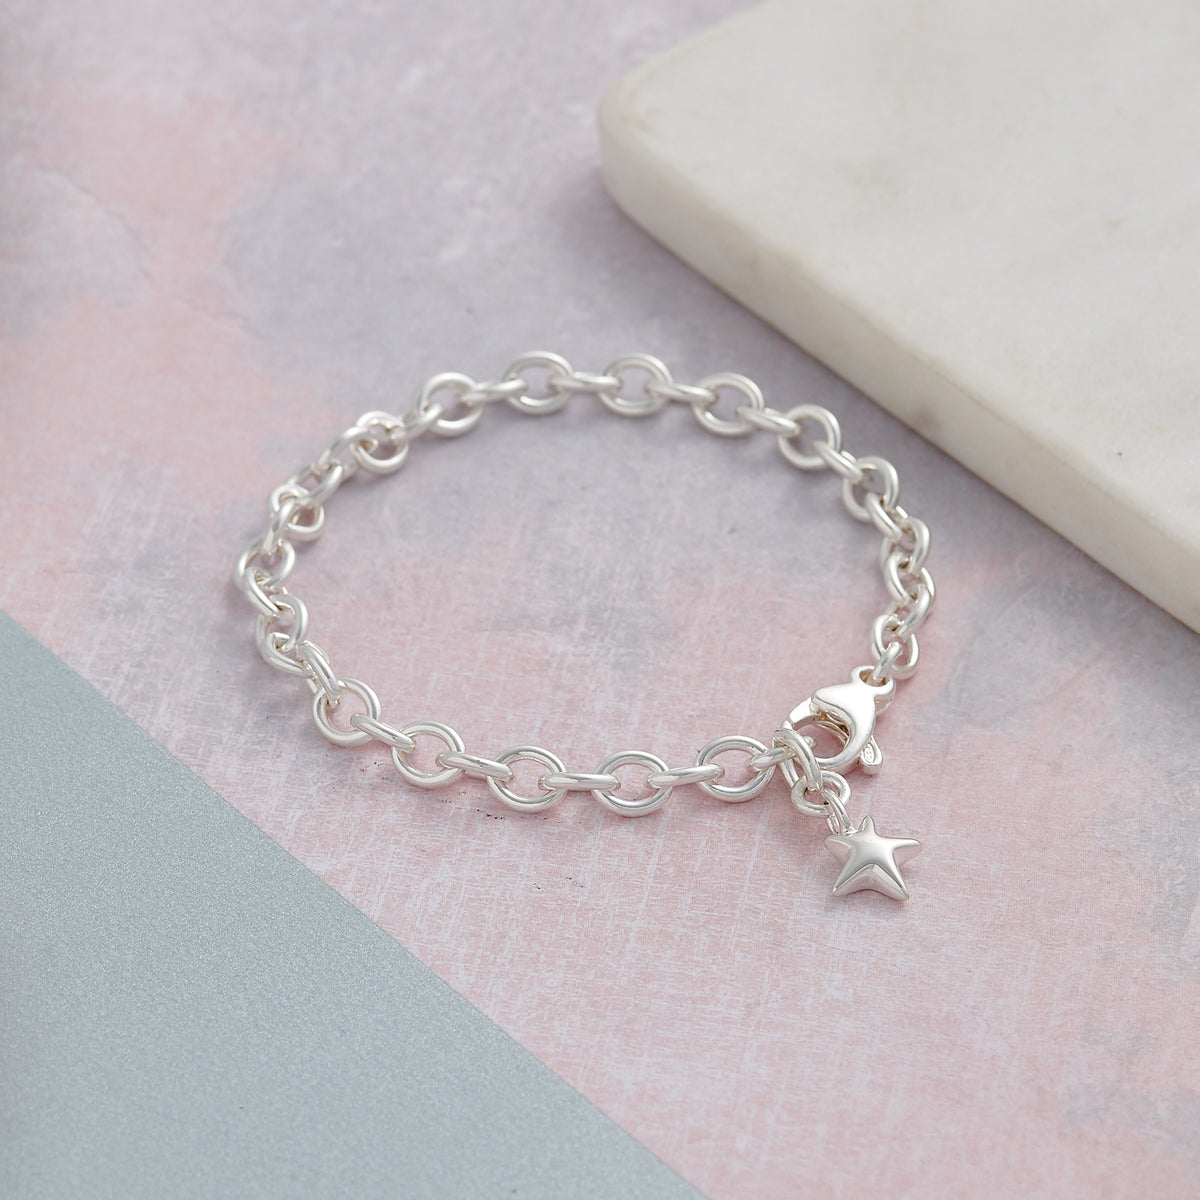 Solid silver adjustable charm bracelet with star Scarlett Jewellery